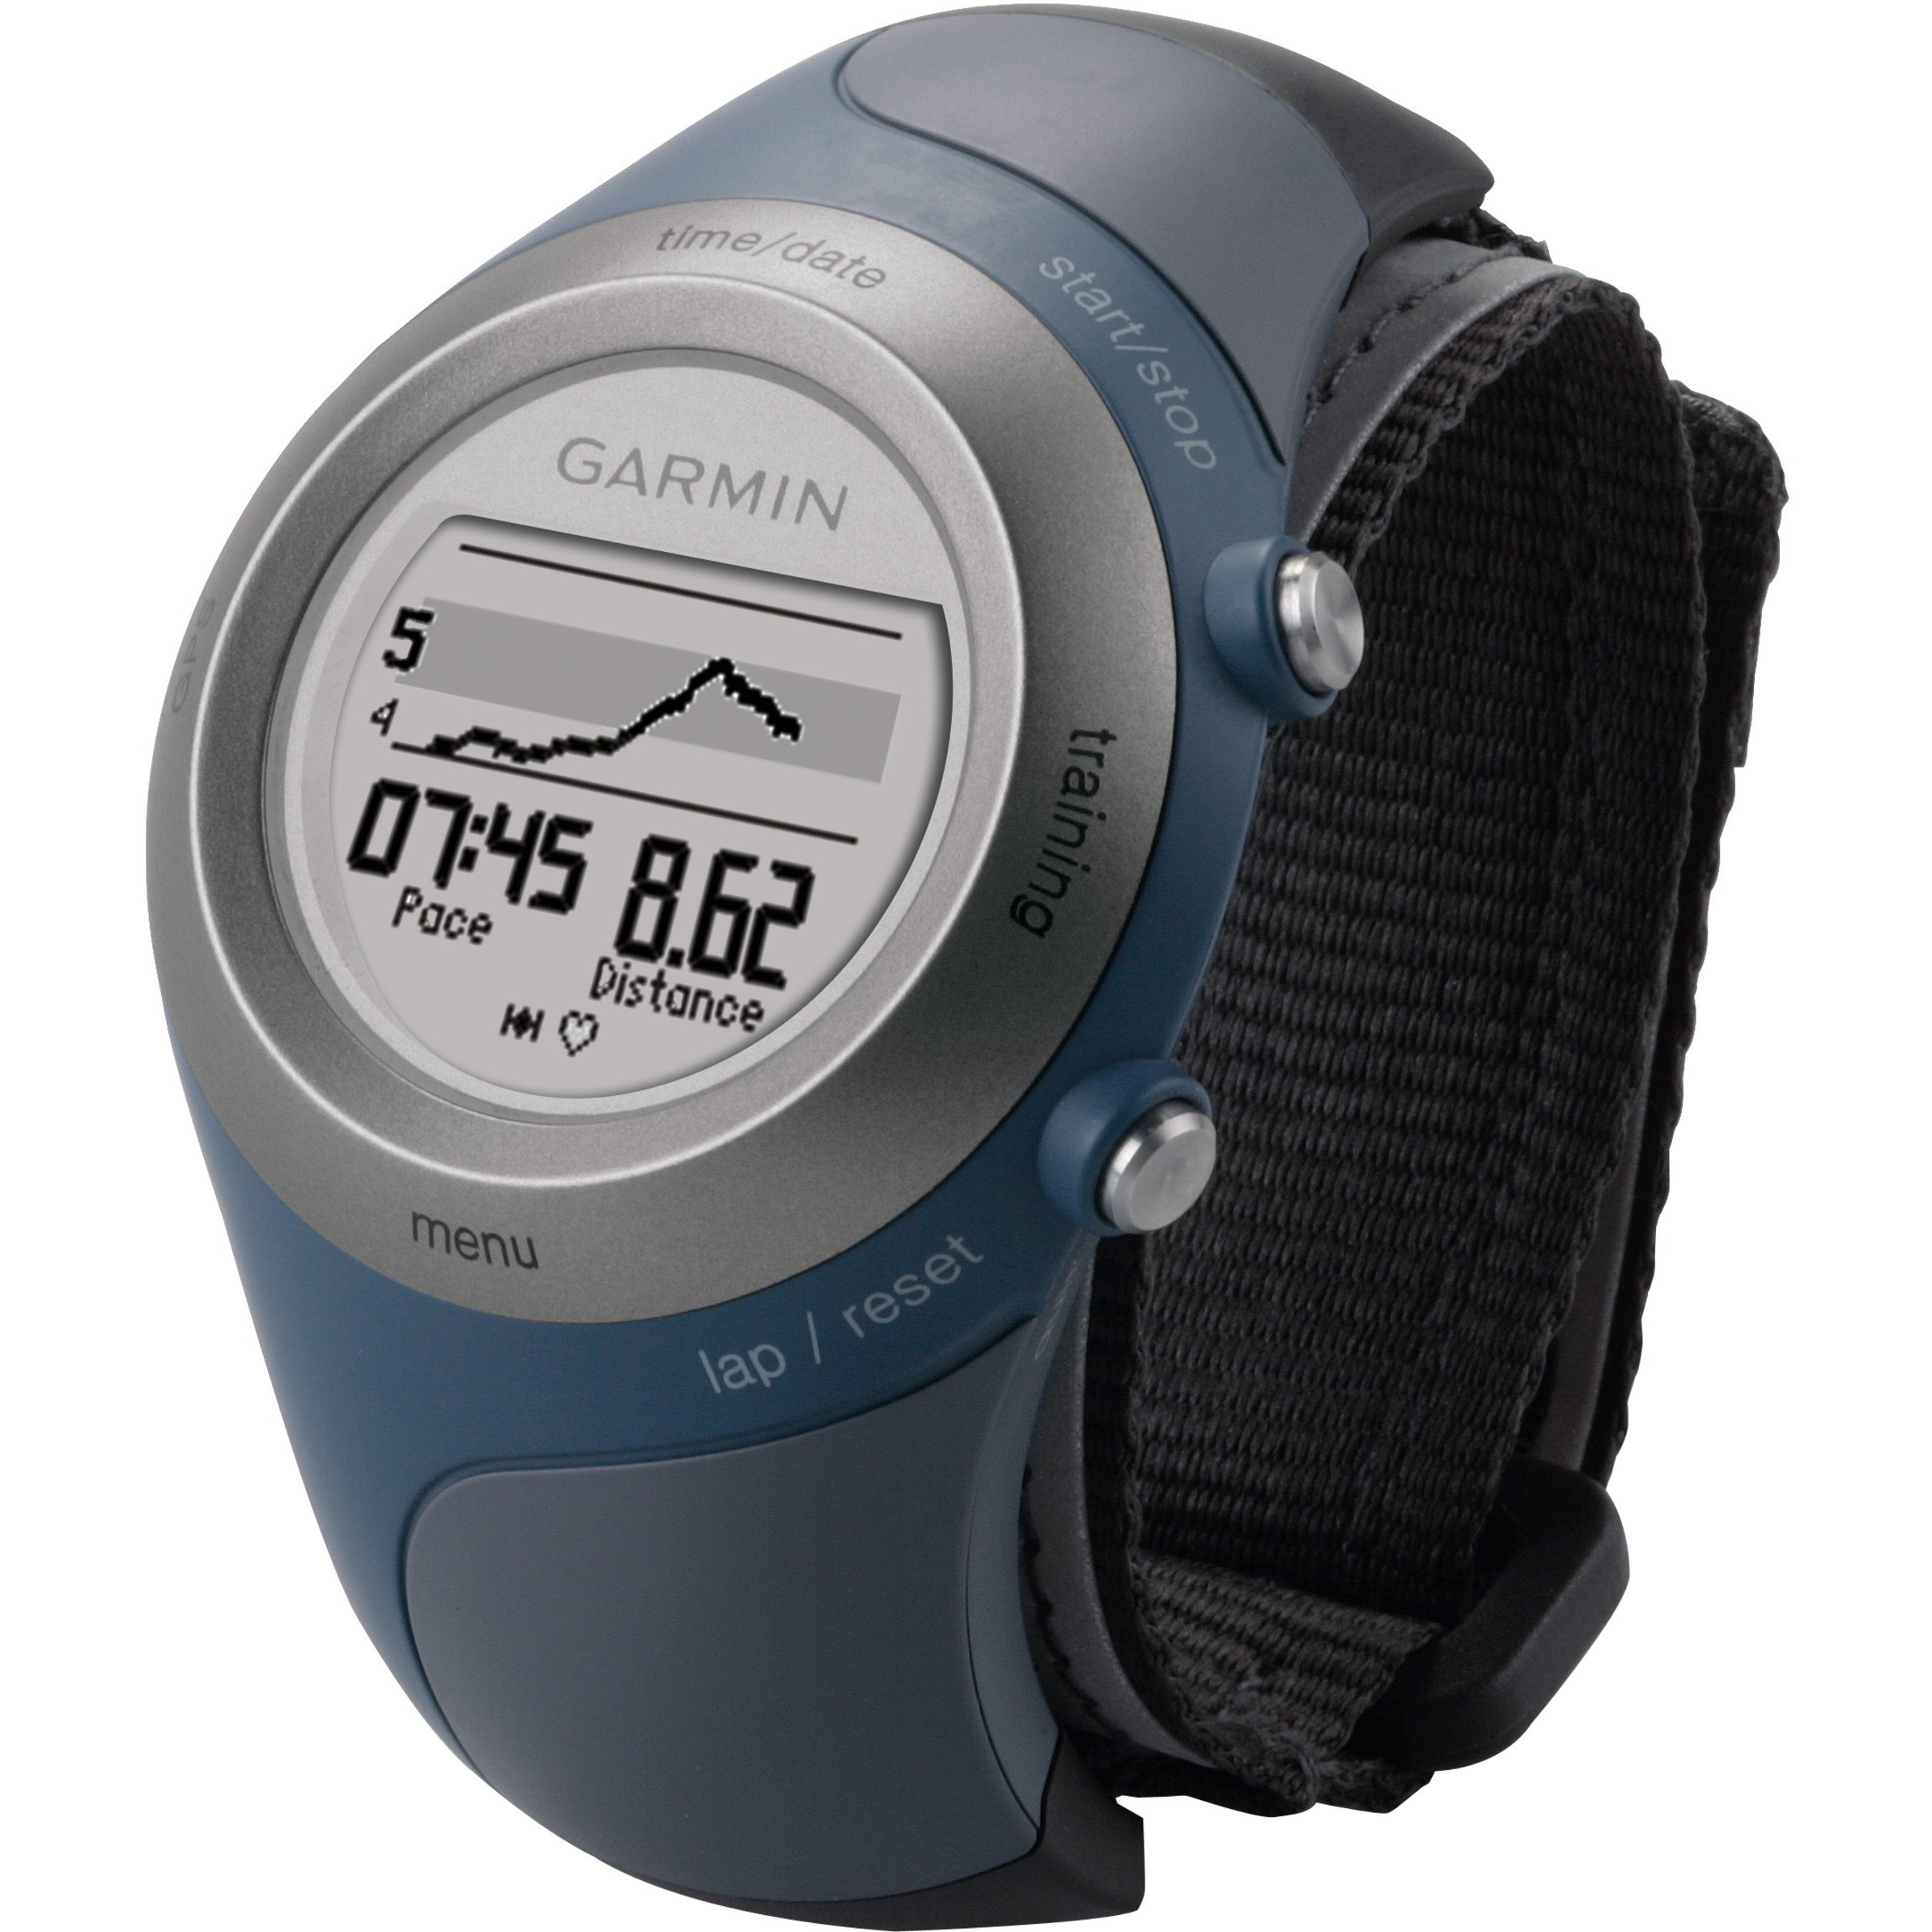 Garmin Forerunner 405CX GPS Watch - image 1 of 3